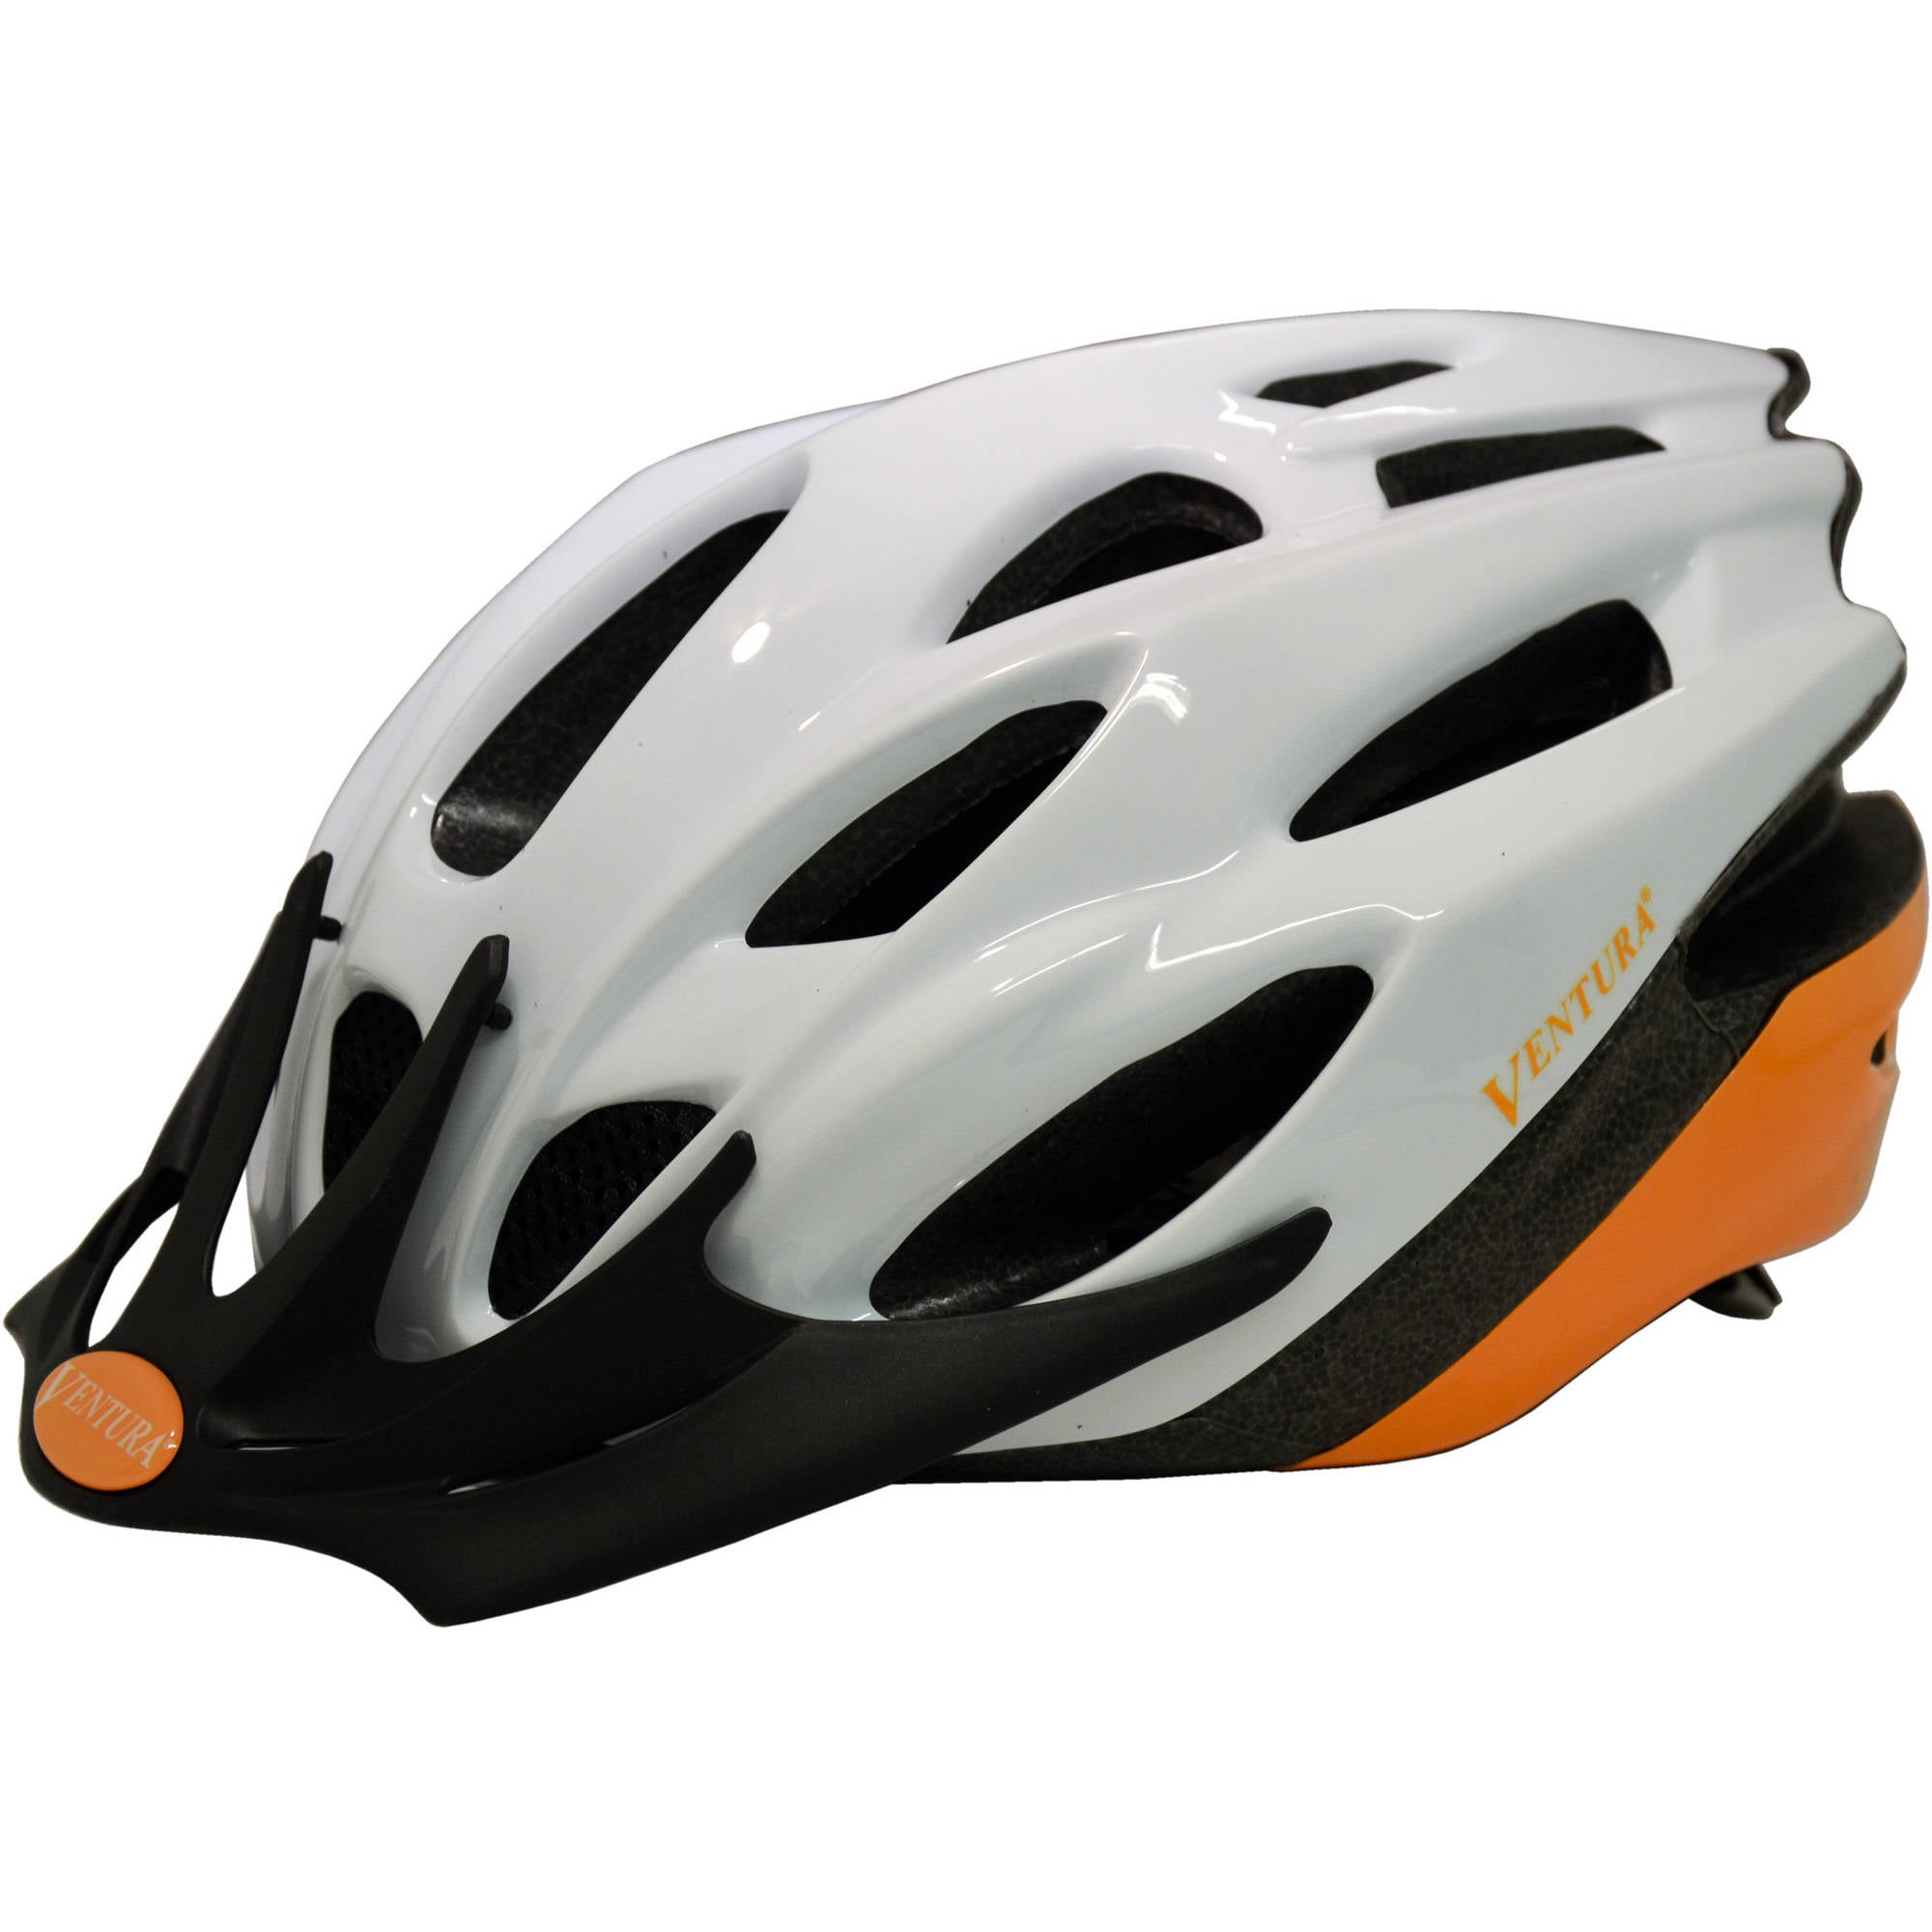 Raleigh Ventura Adjustable Unisex Bike Helmet 20 Air Vents Size L 58-62cm Blue 